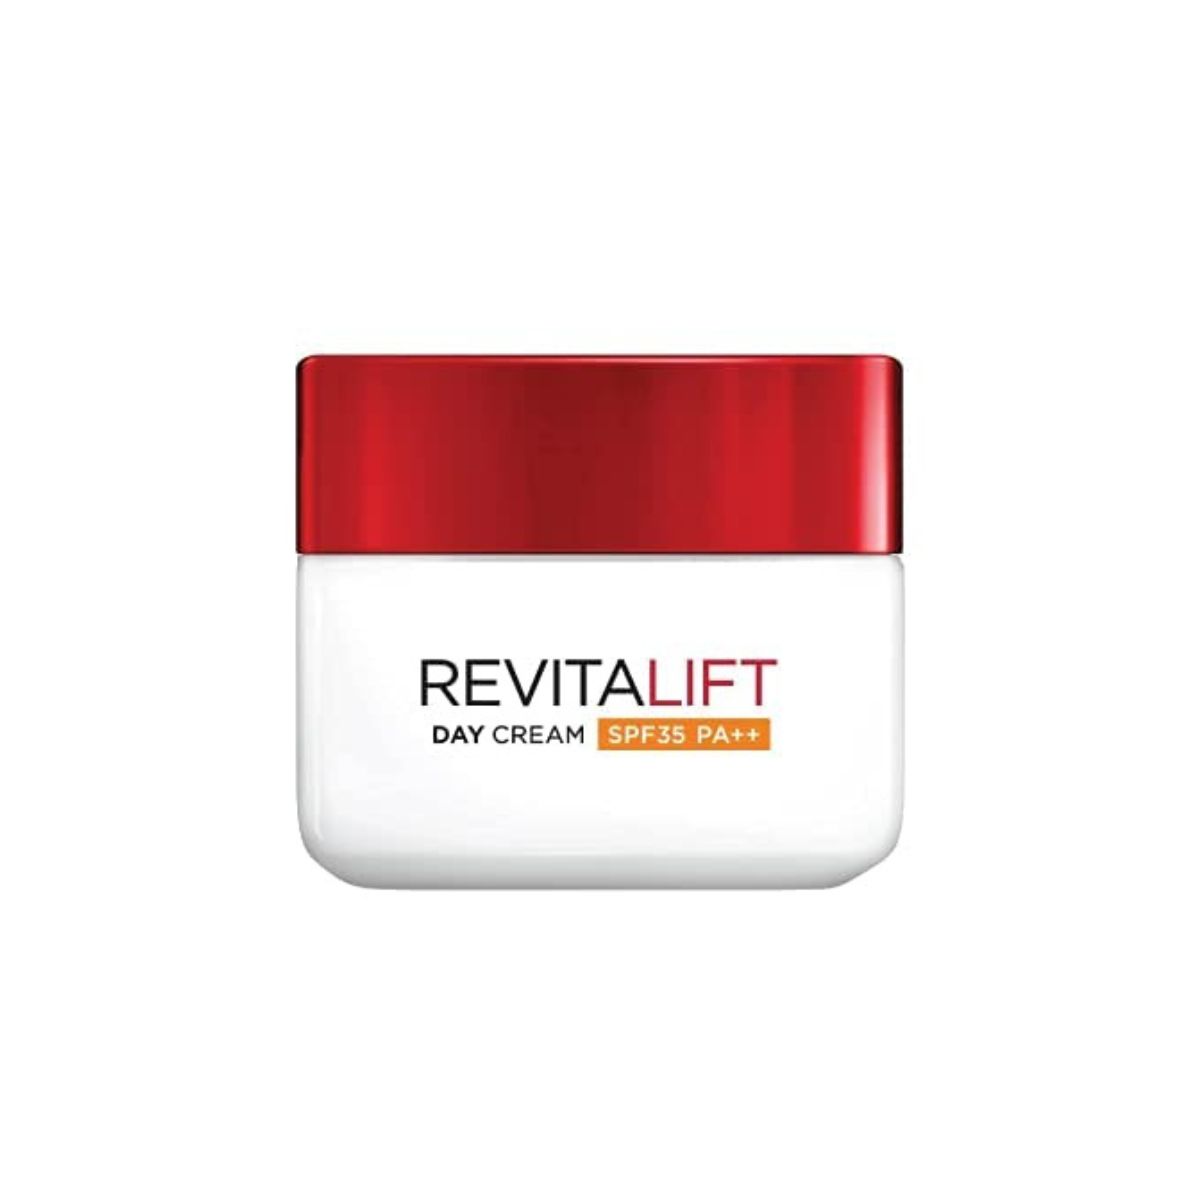 L'oreal Revitalift Mositurizing Cream Day SPF35 PA++ - Anti-Wrinkle + Radiance - 50ml